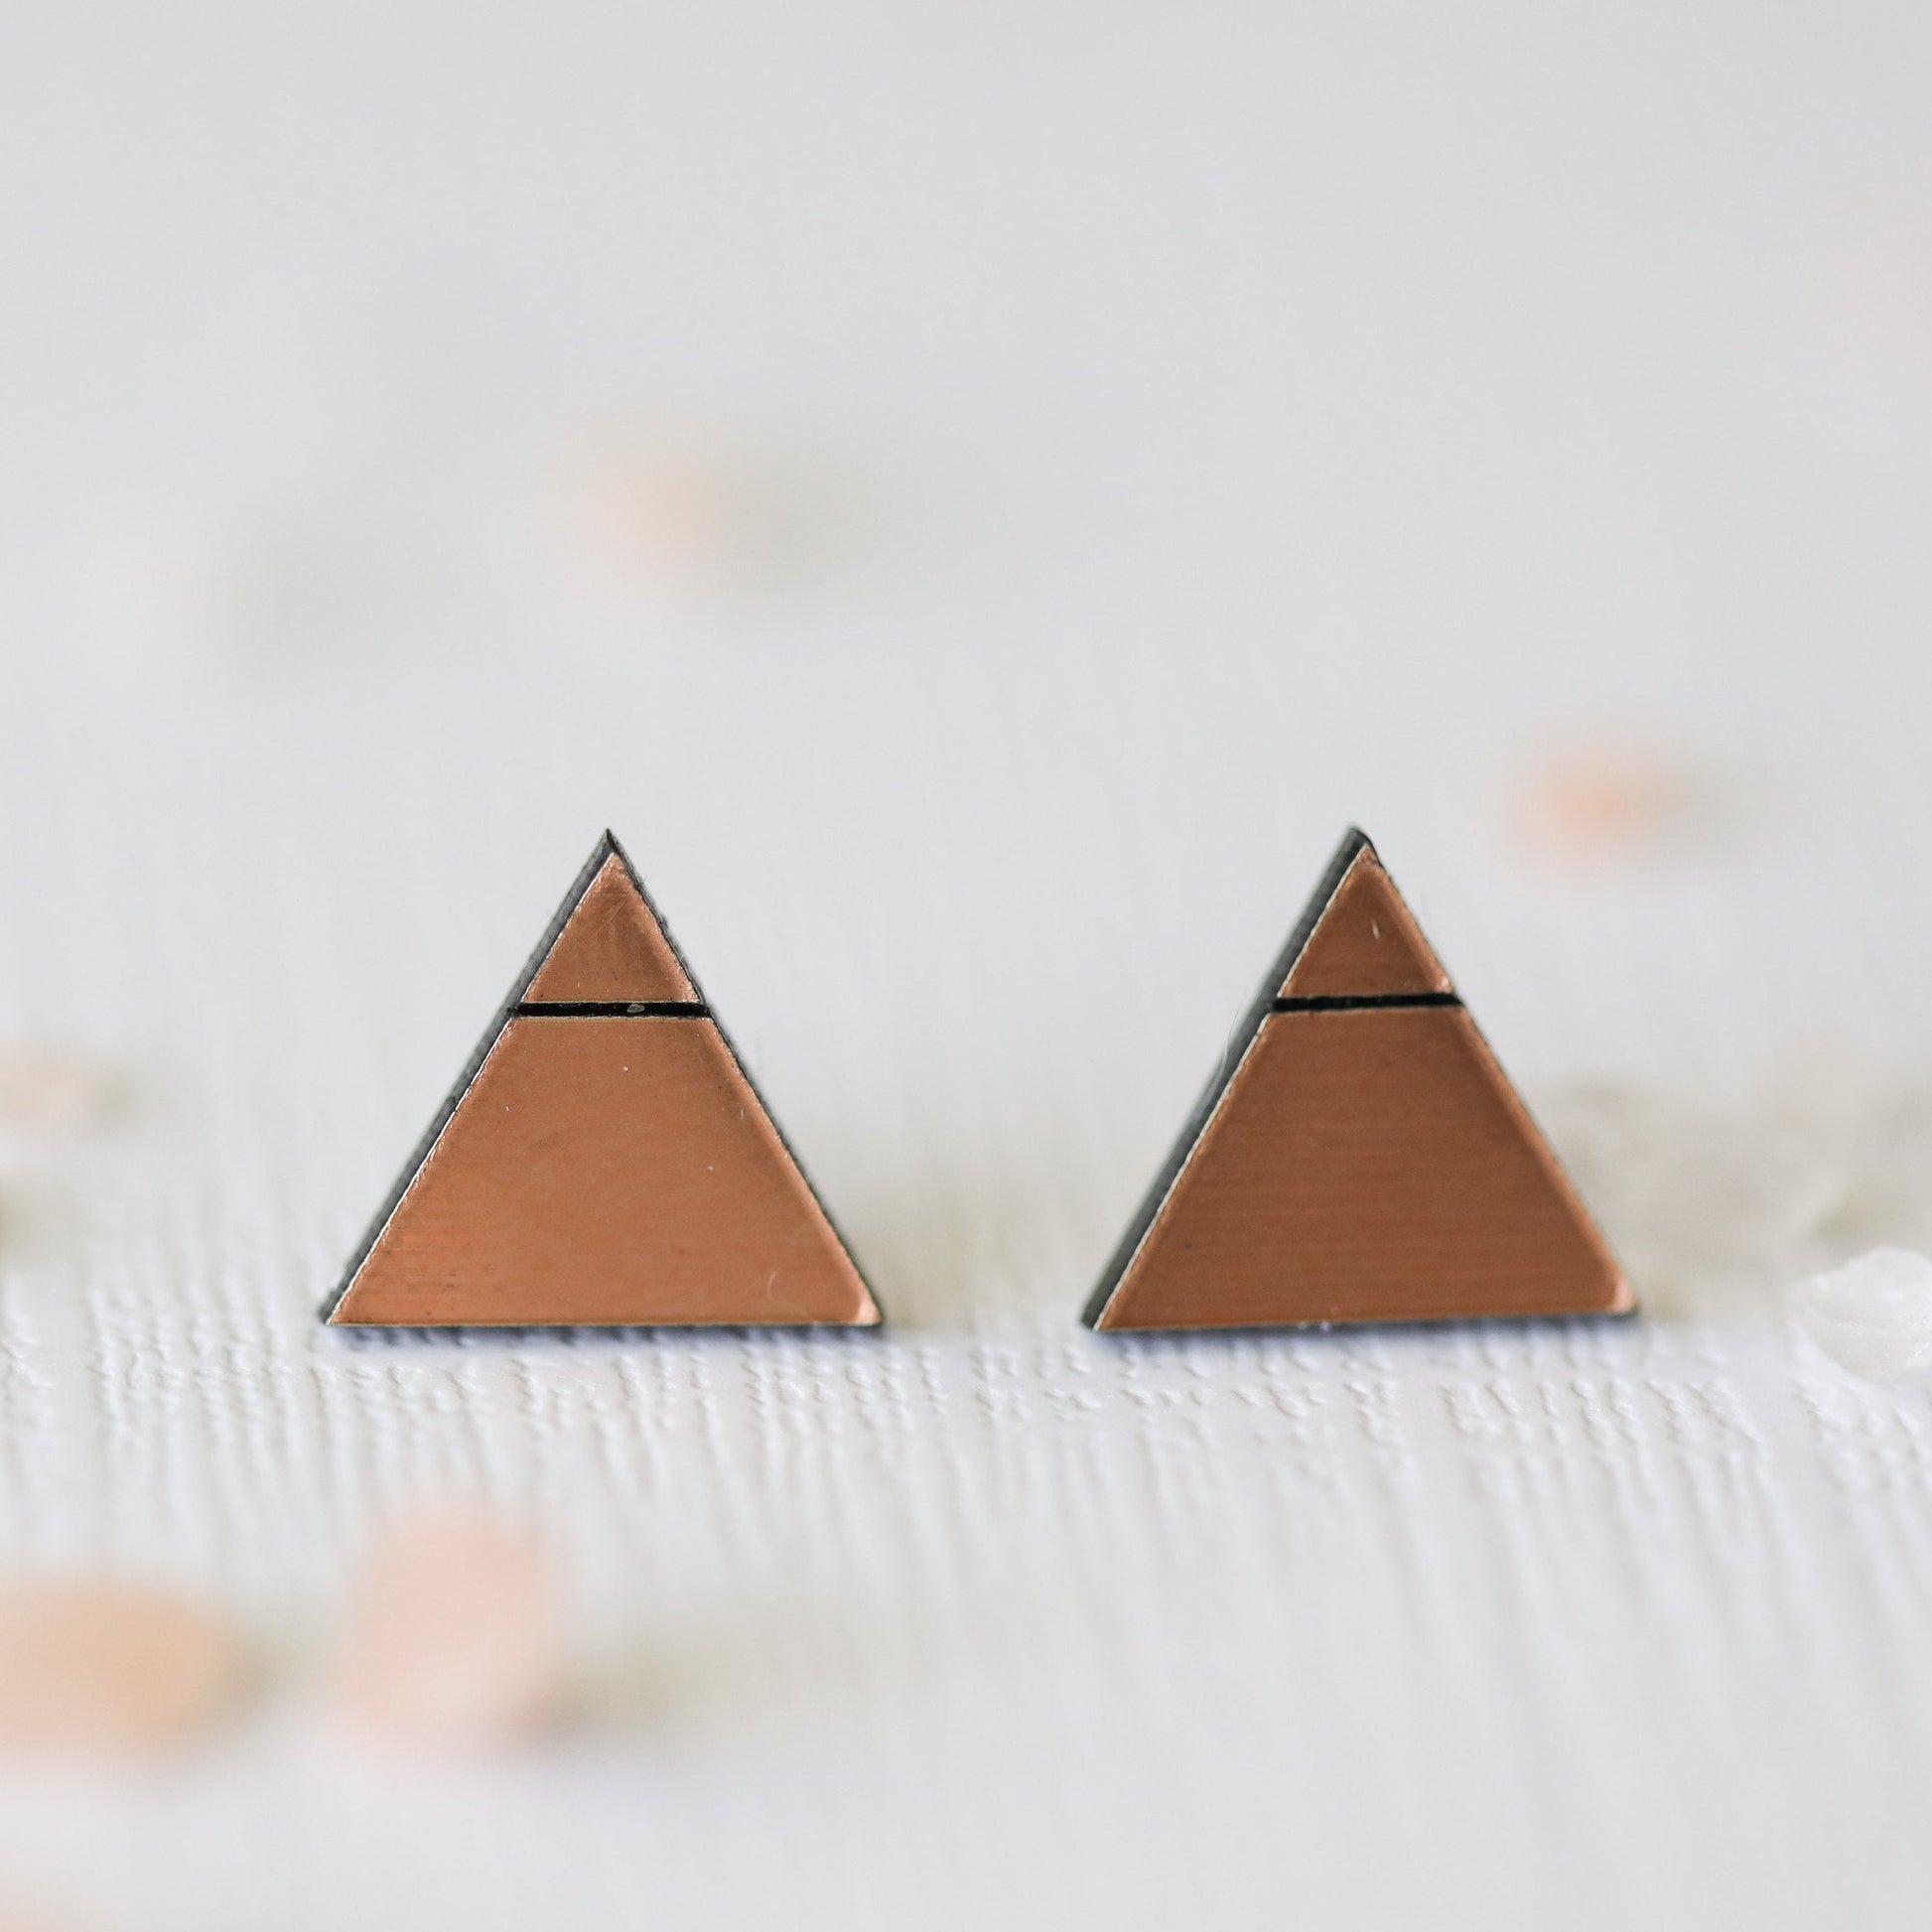 Laser Cut Geometric Earrings - Copper Acrylic GeoStud Triangles - by LeeMo Designs in Bend, Oregon